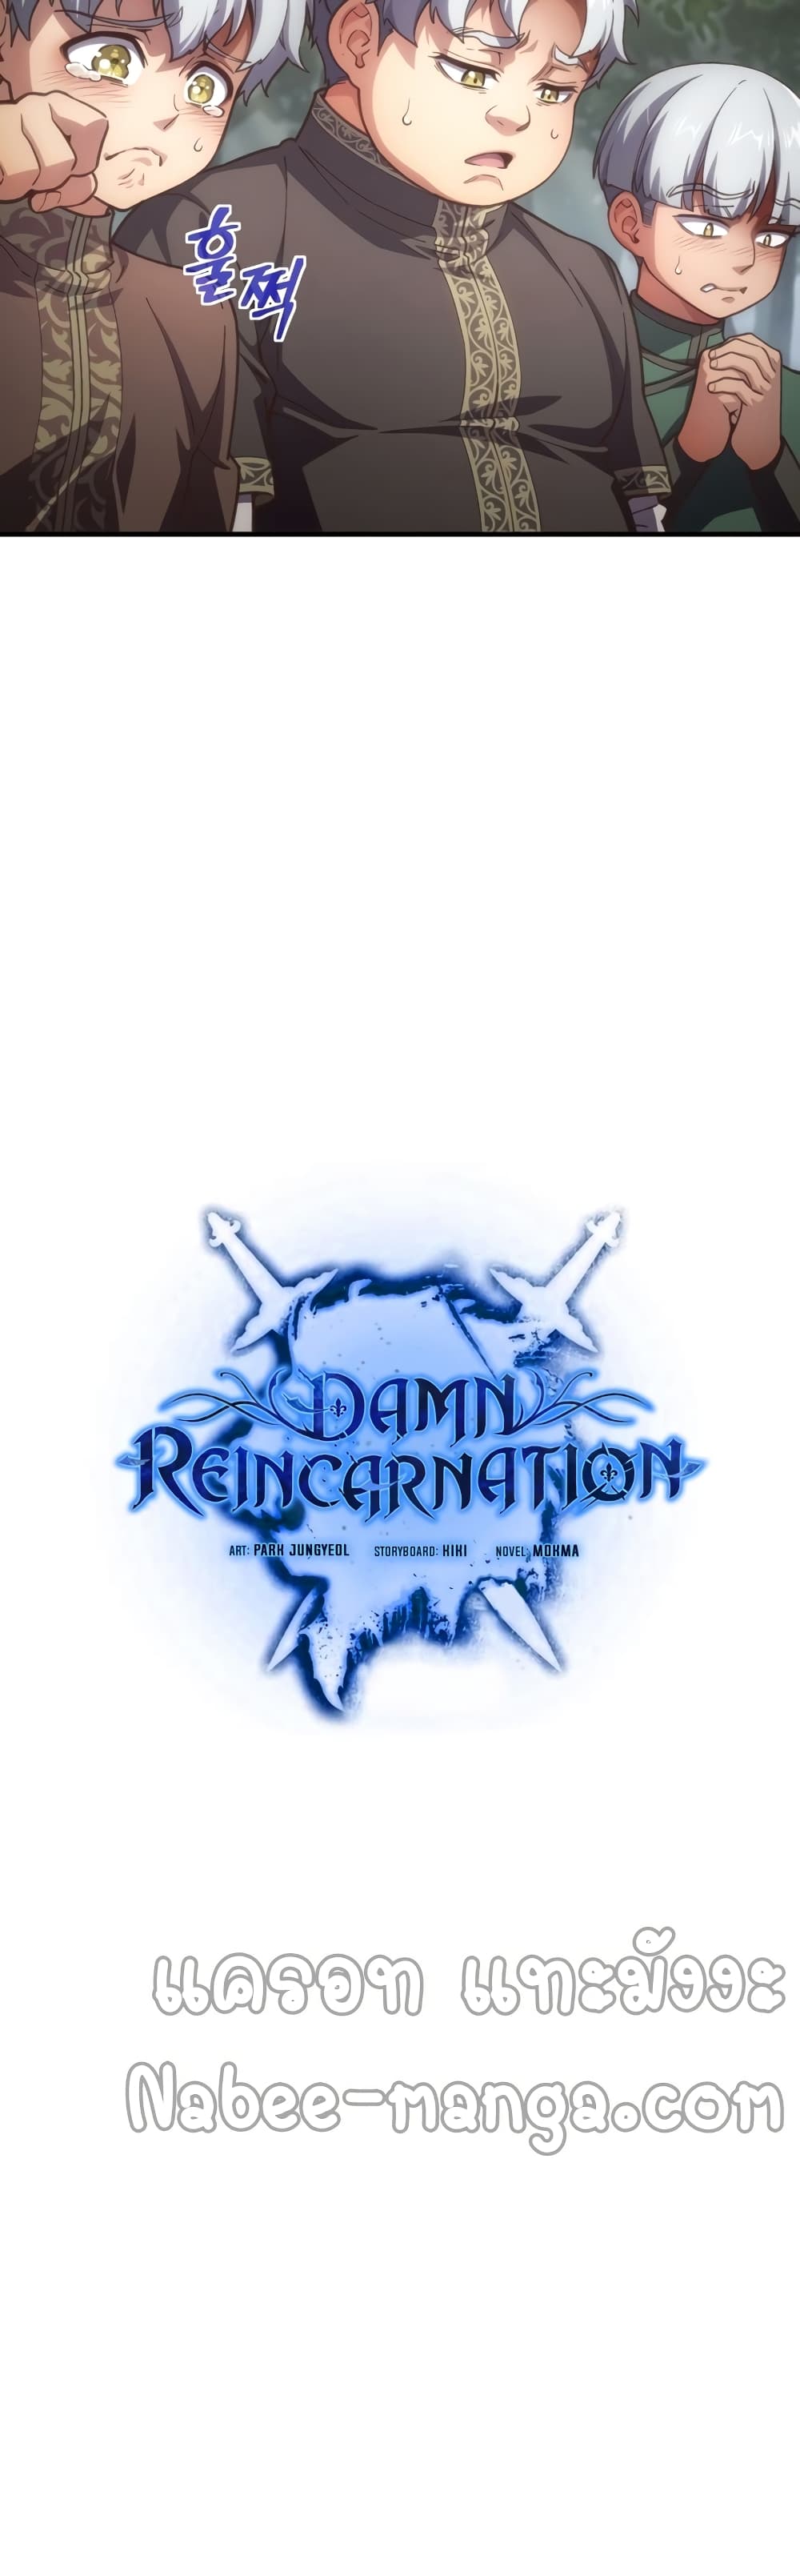 Damn Reincarnation9 08